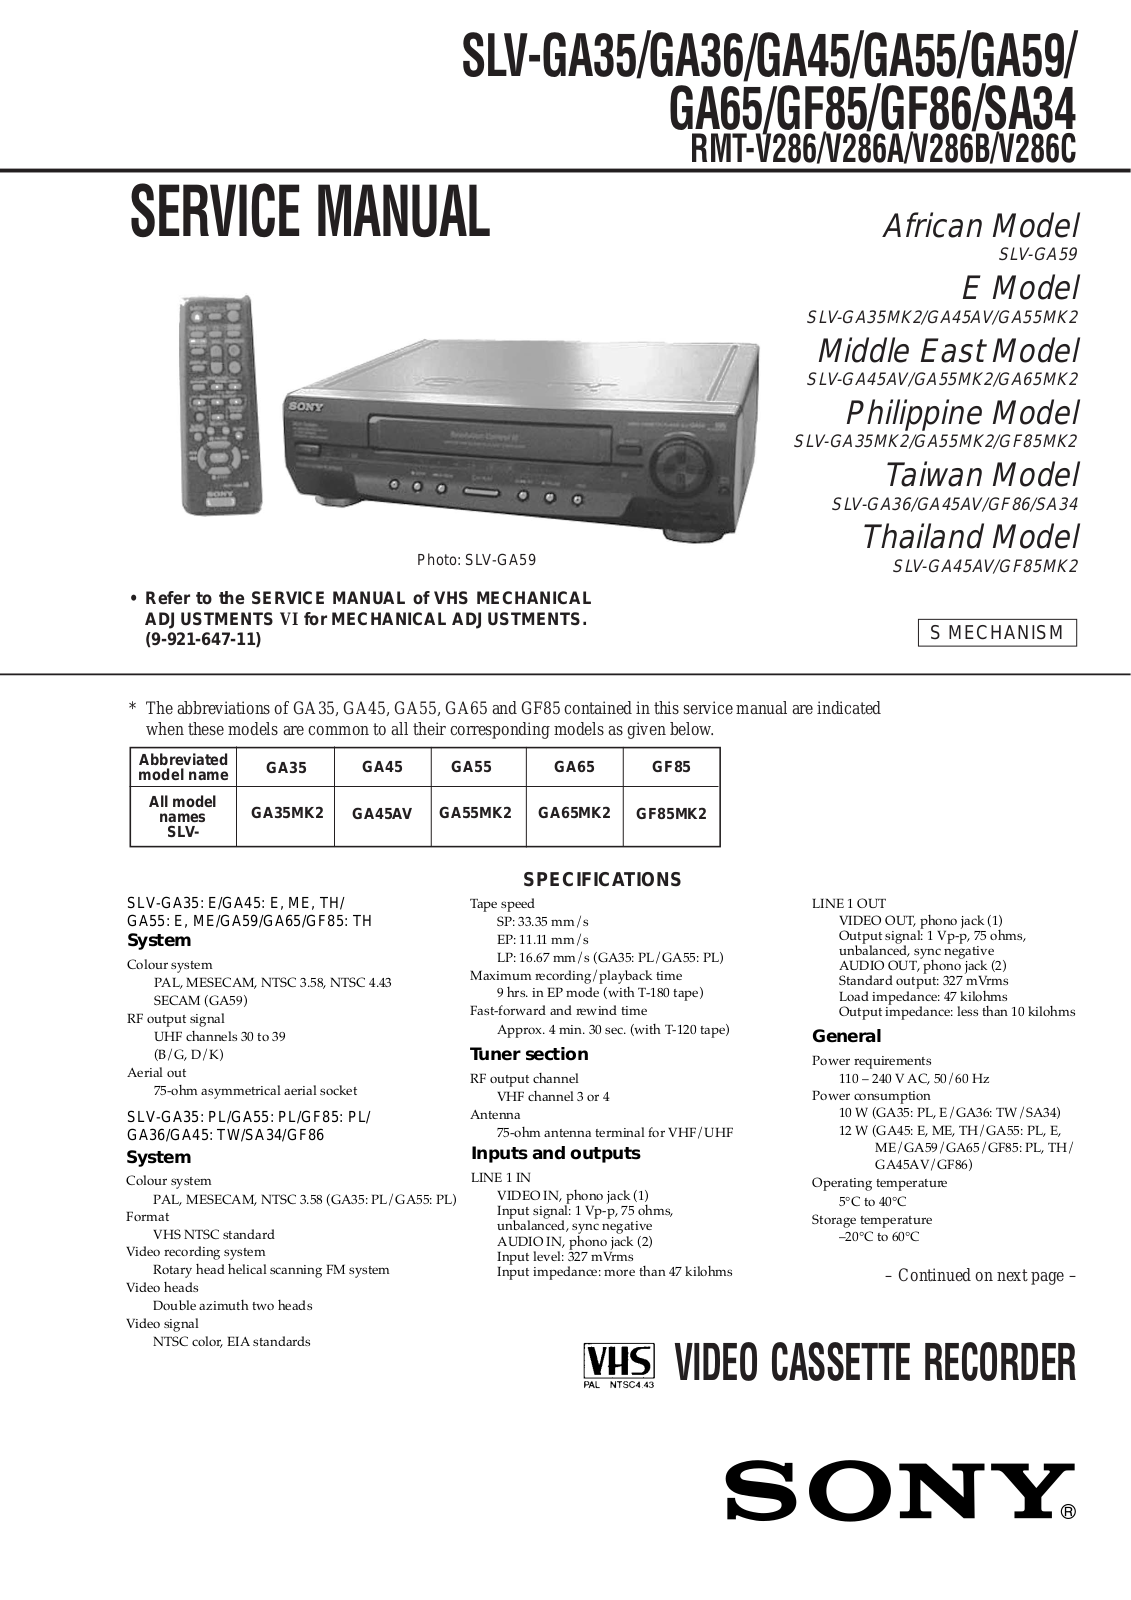 Sony SLV-GA35, SLV-GA36, SLV-GA45, SLV-GA55, SLV-GA59 Service Manual